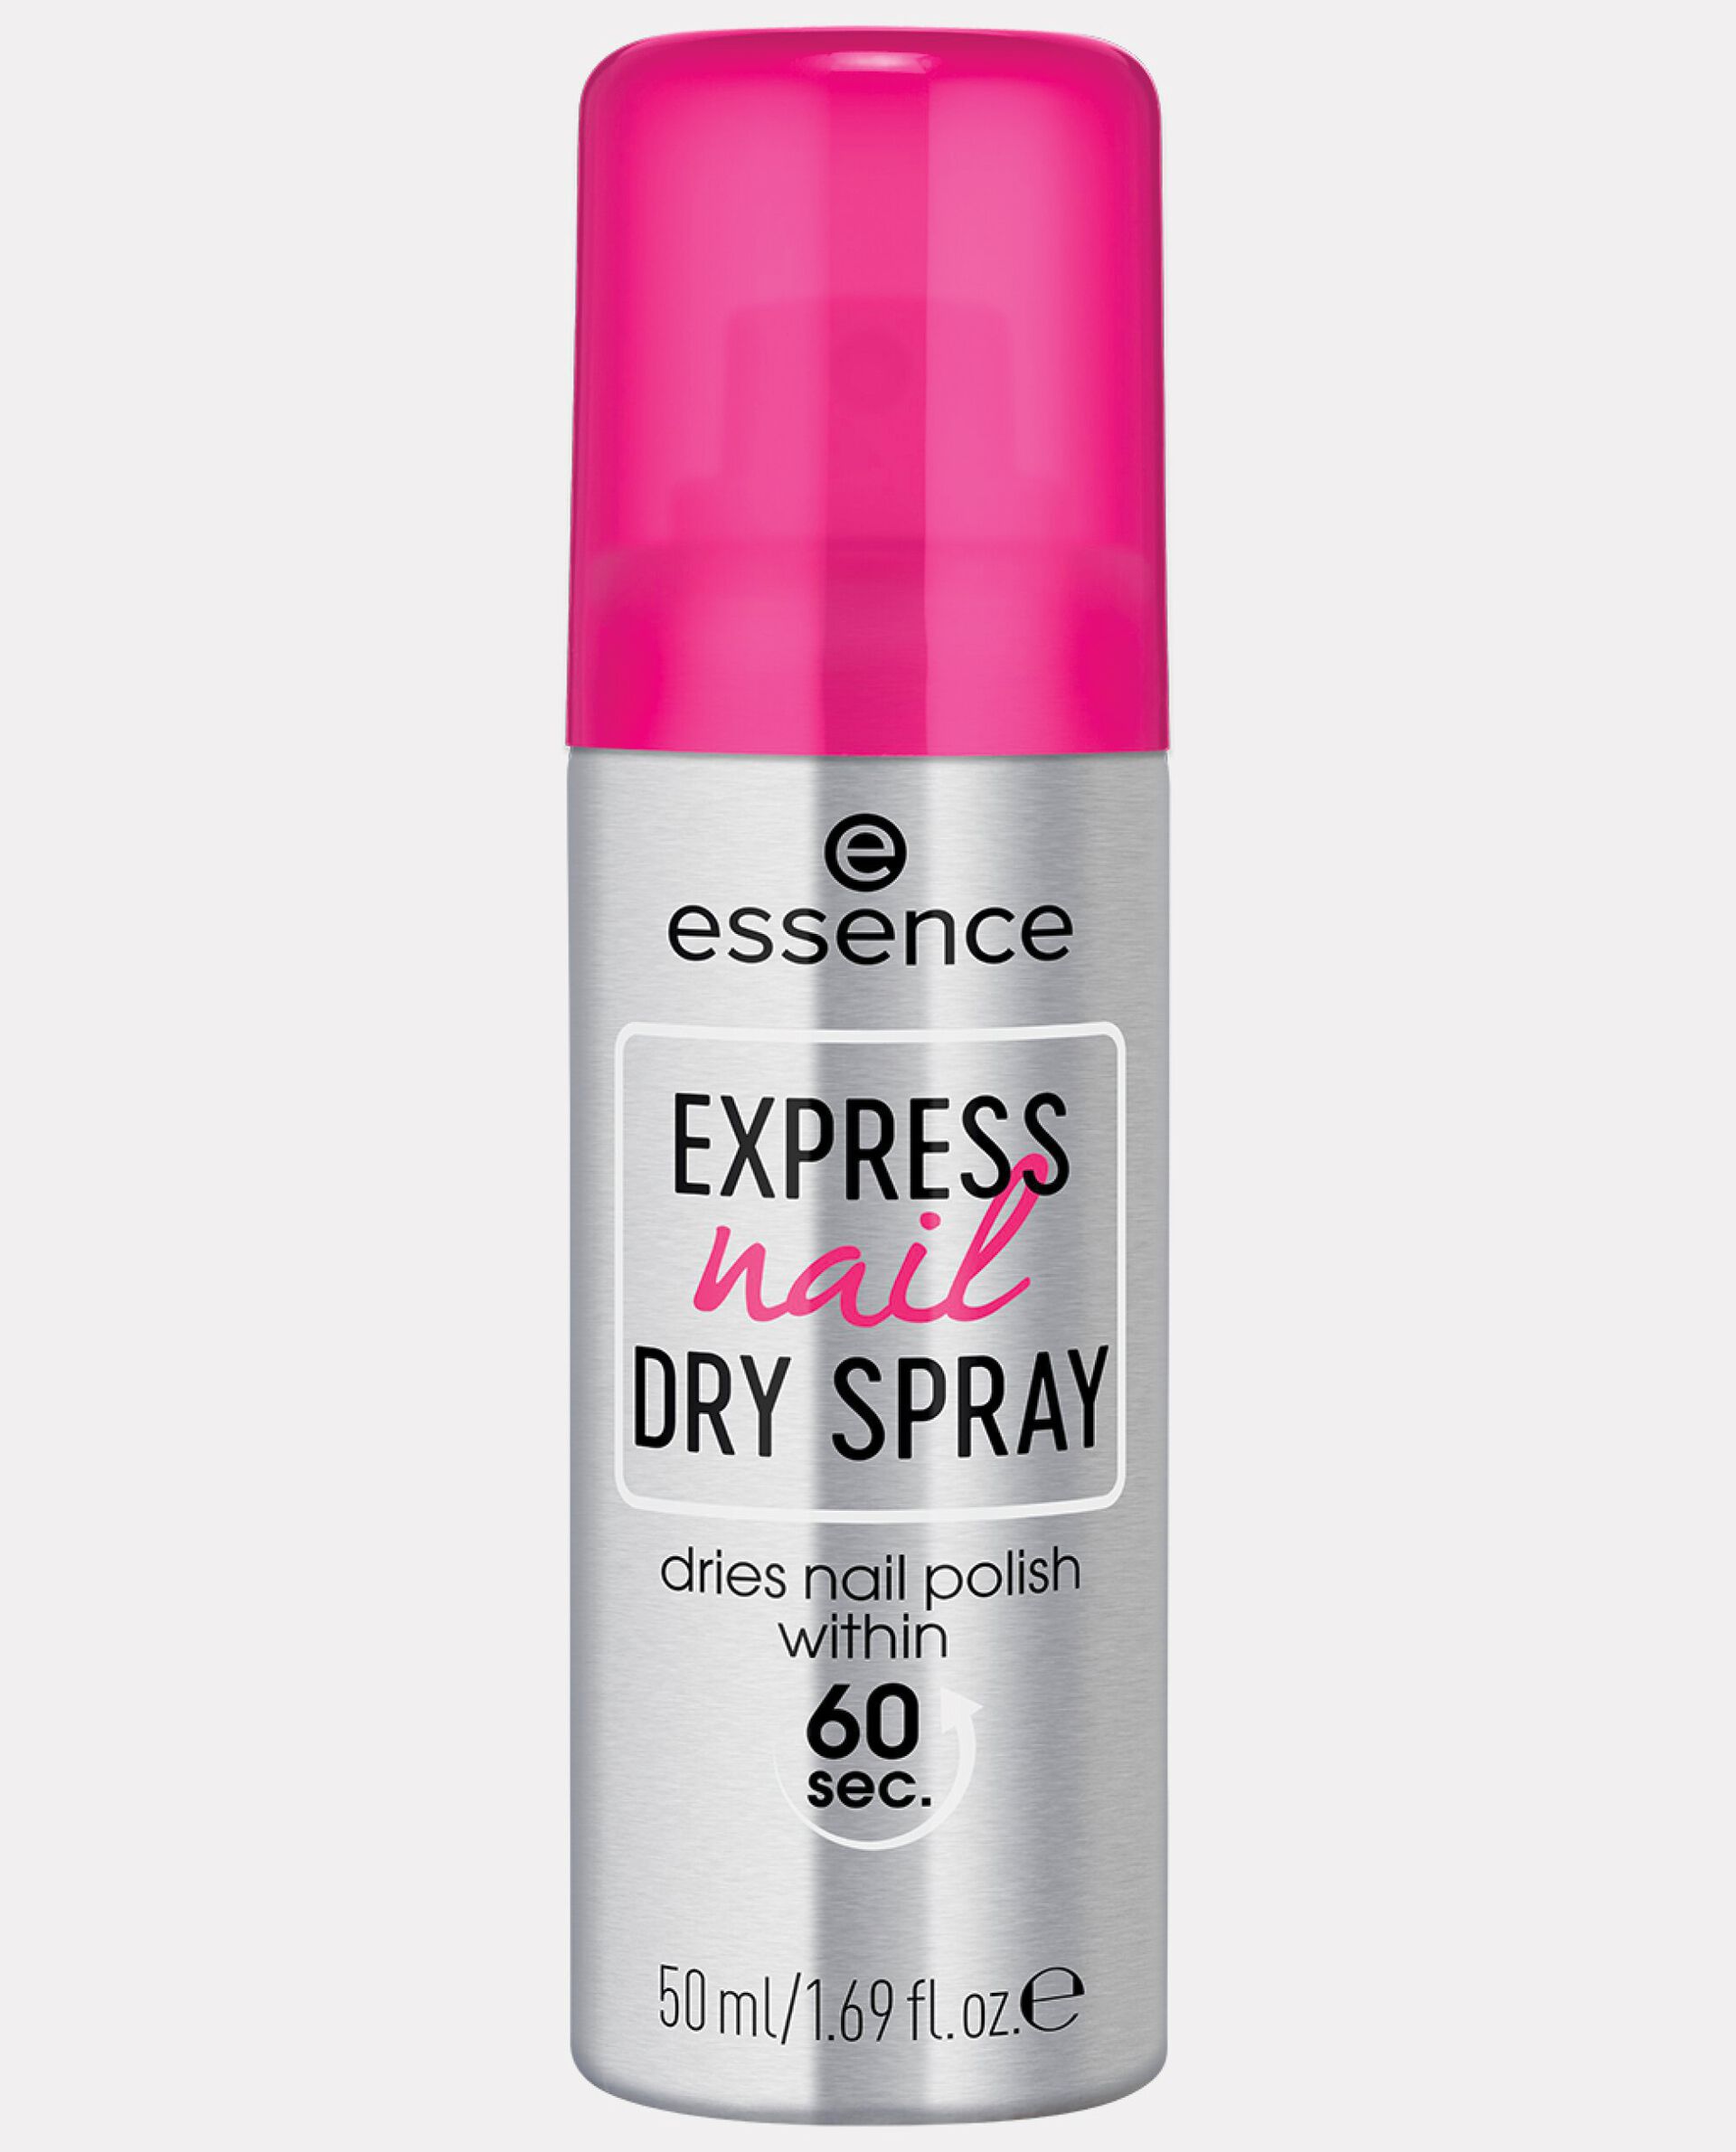 Essence express spray ad asciugatura rapida per smalto unghie